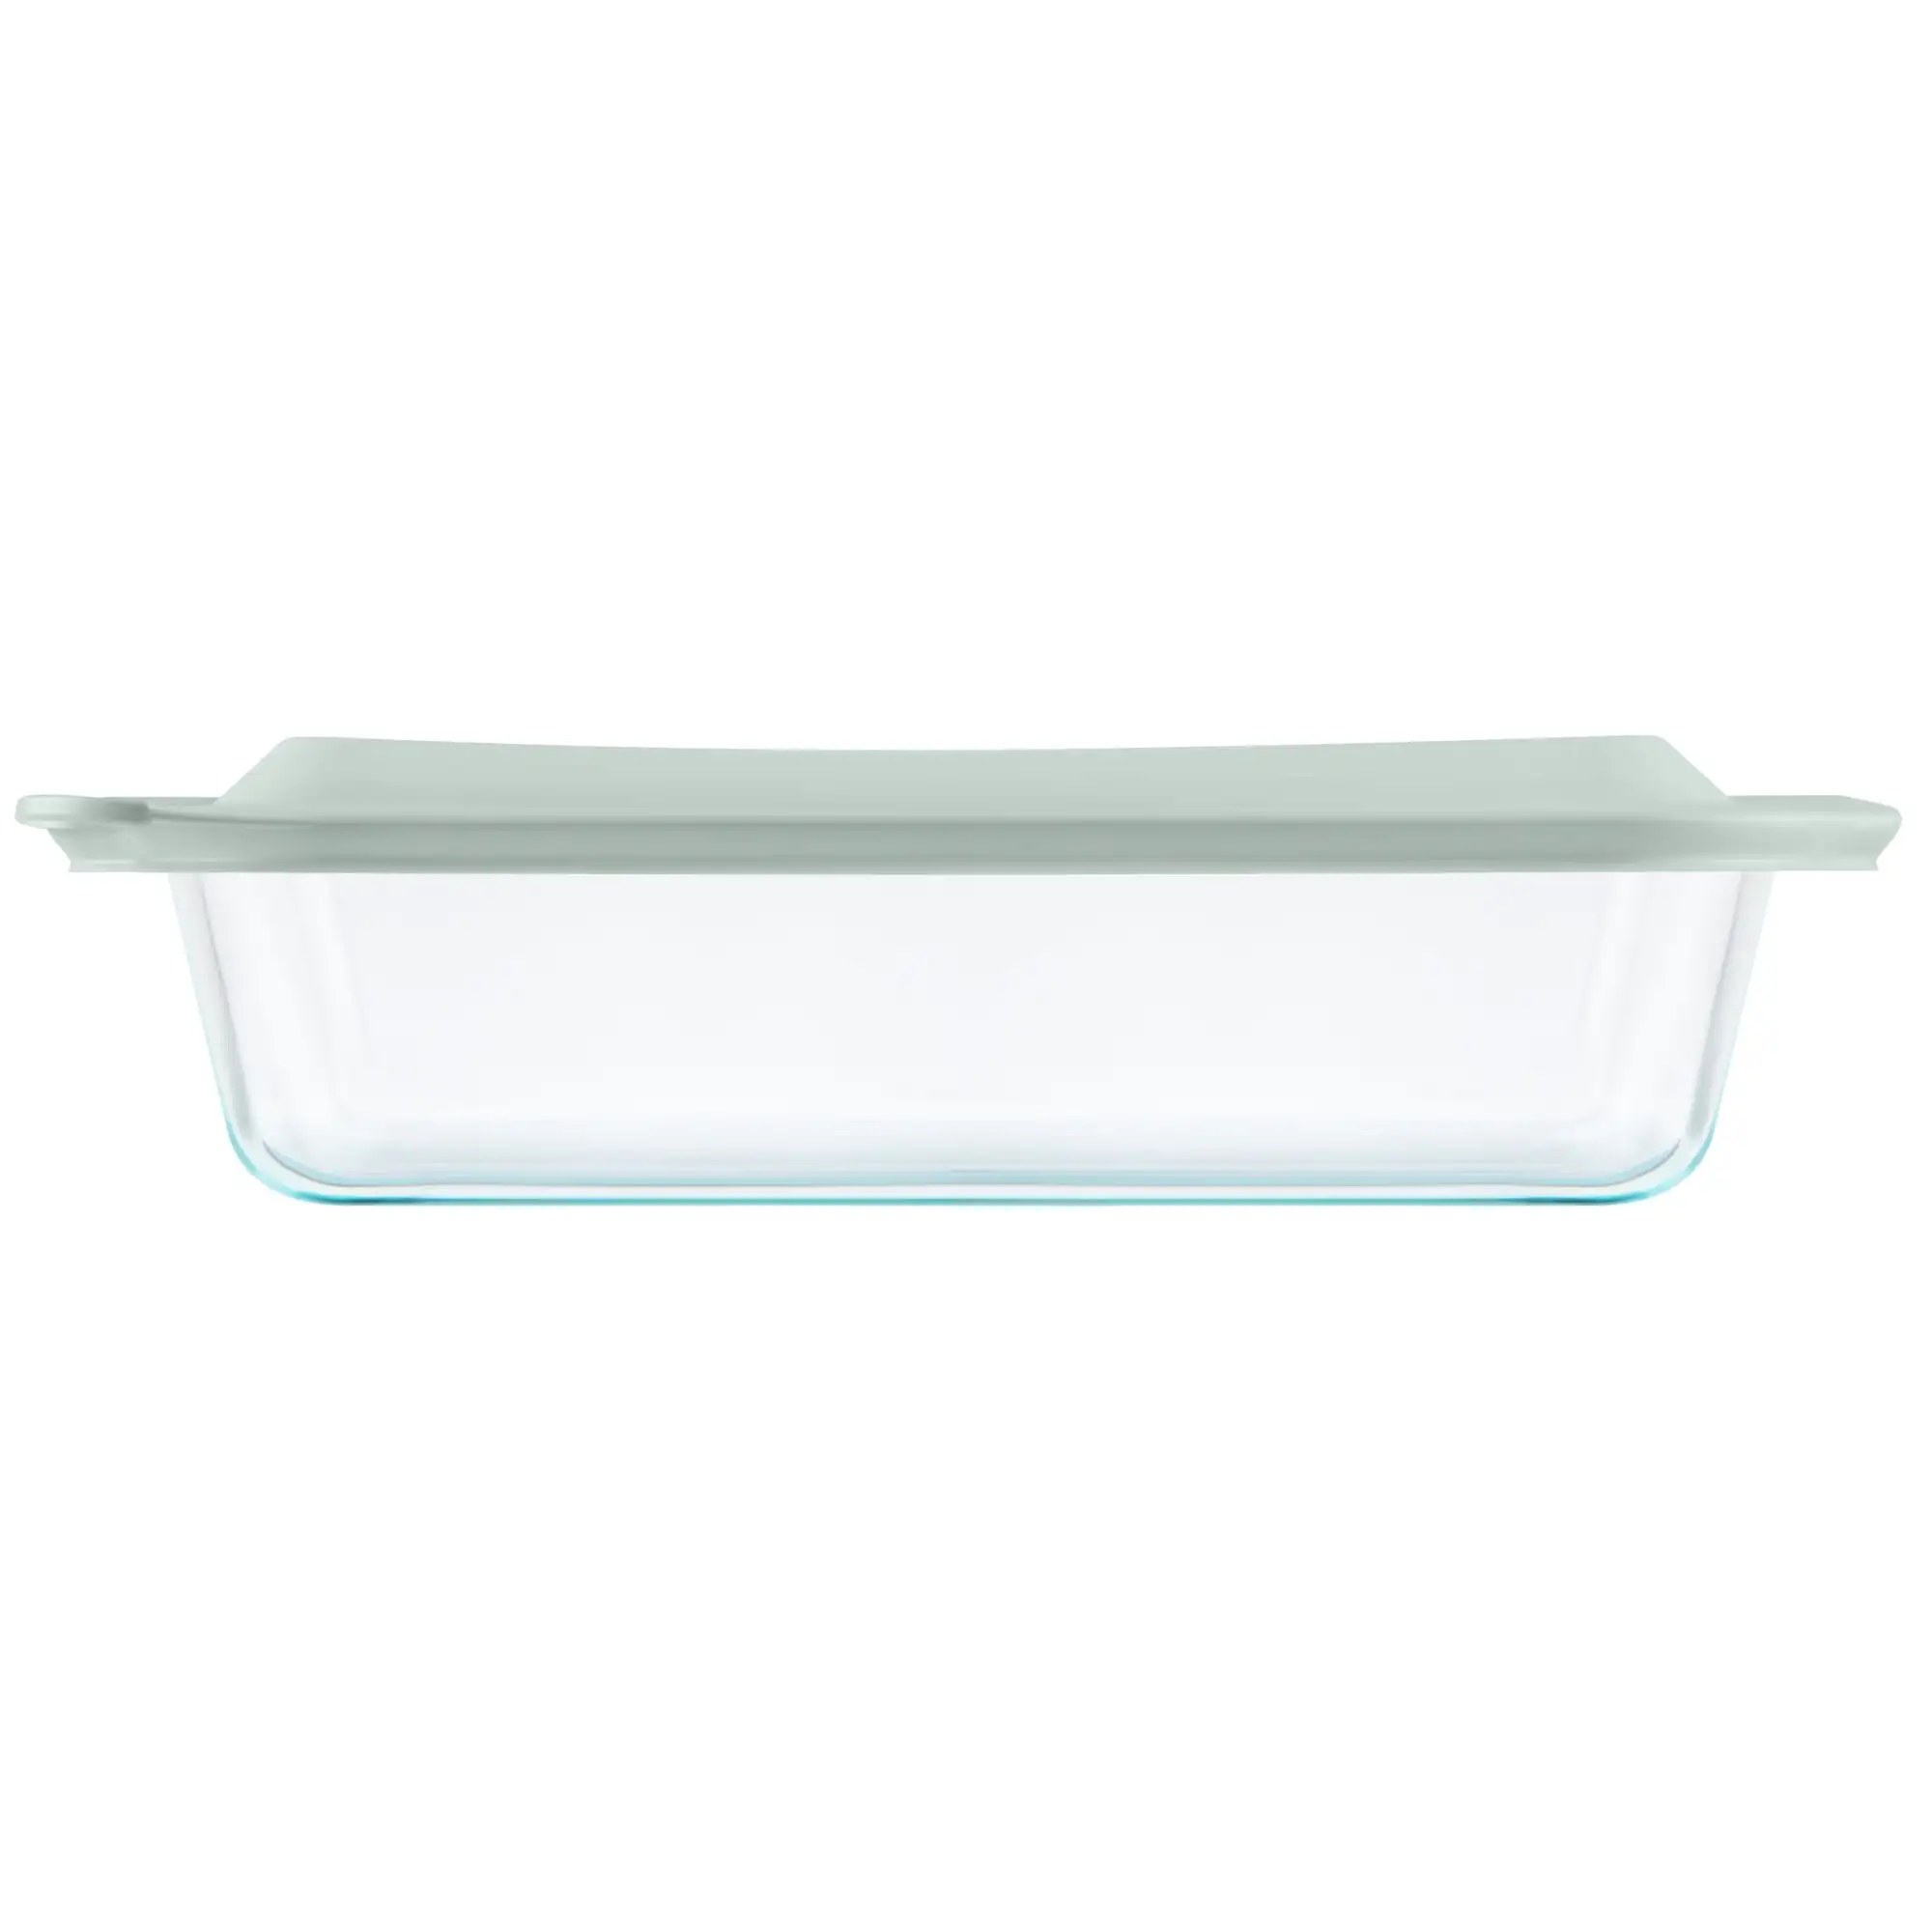 https://ae01.alicdn.com/kf/S00dfeb94a74a4c318df39a00e0407a59e/Deep-9-X-13-Rectangular-Glass-Baking-Dish-with-Sage-Green-Lid-5-Quart-Food-Storage.jpg